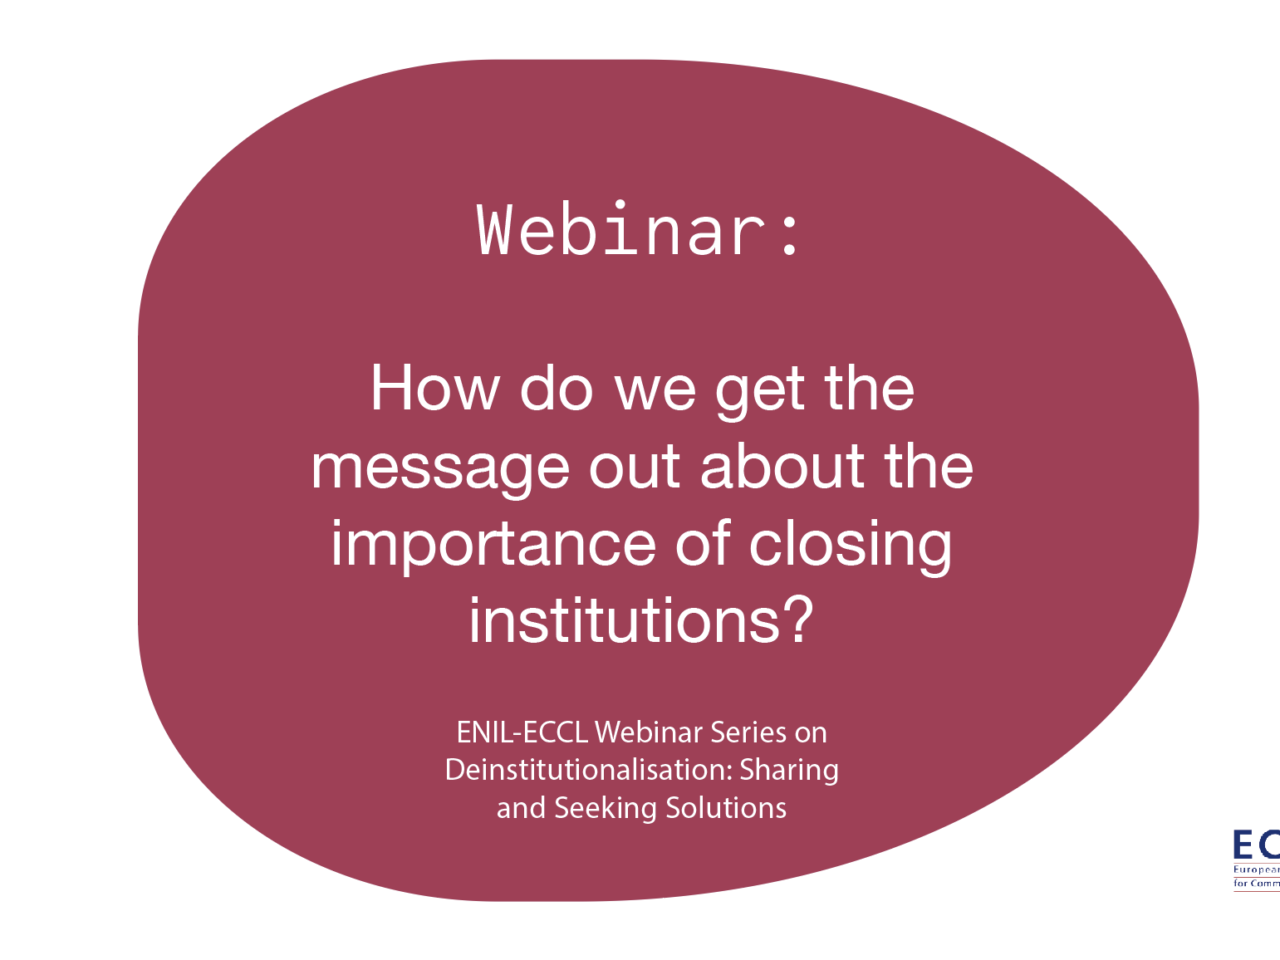 ENIL-ECCL Webinar Series on Deinstitutionalisation: Sharing and Seeking Solutions